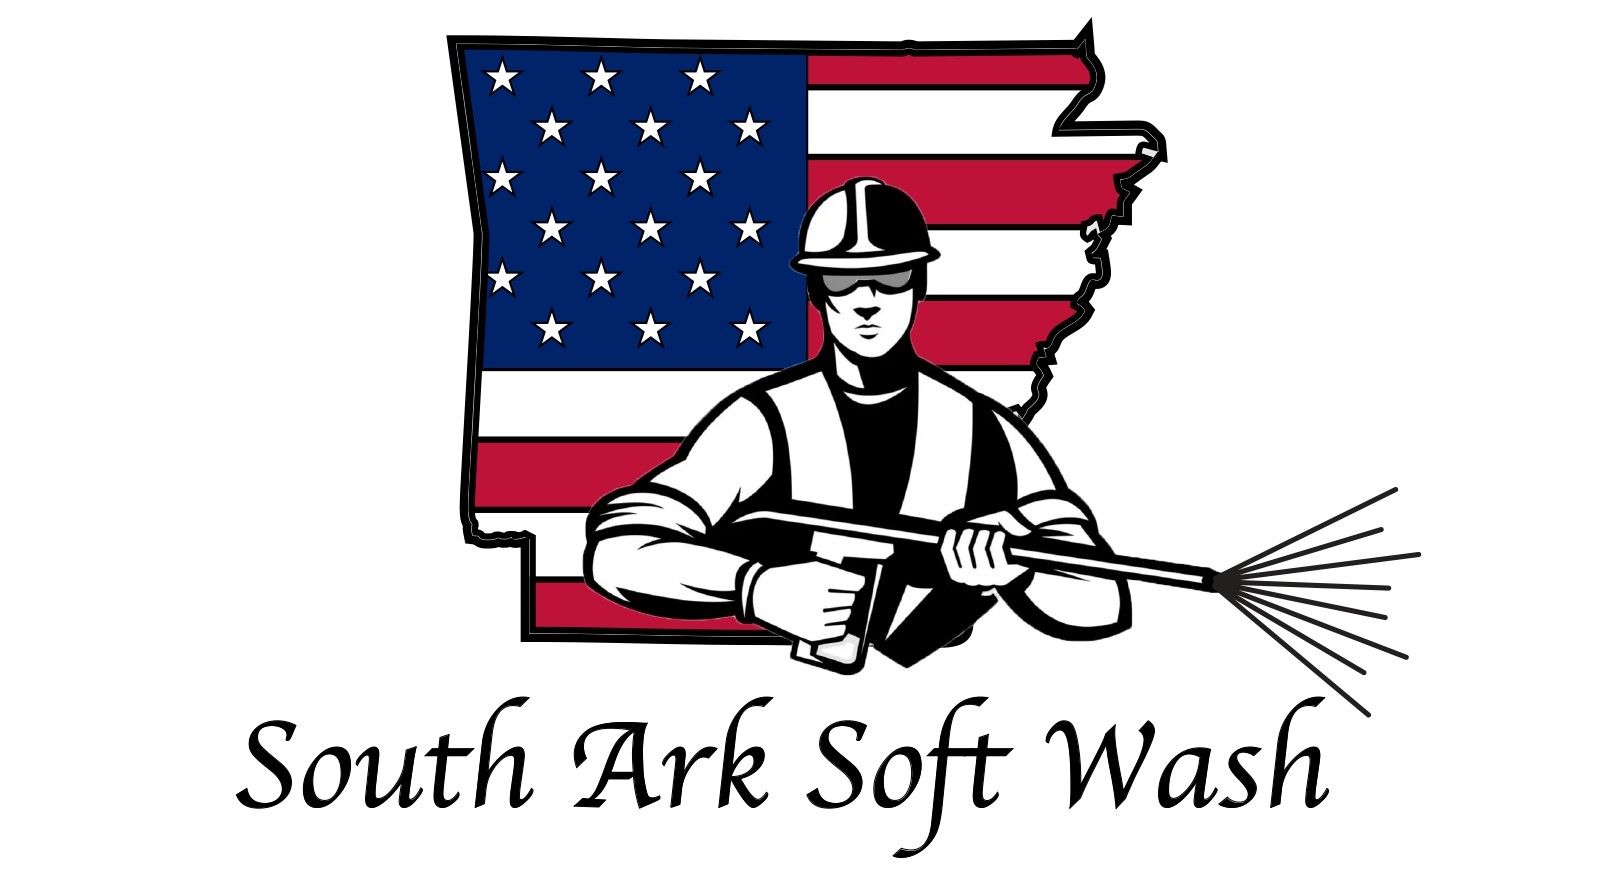 South Ark Soft Wash